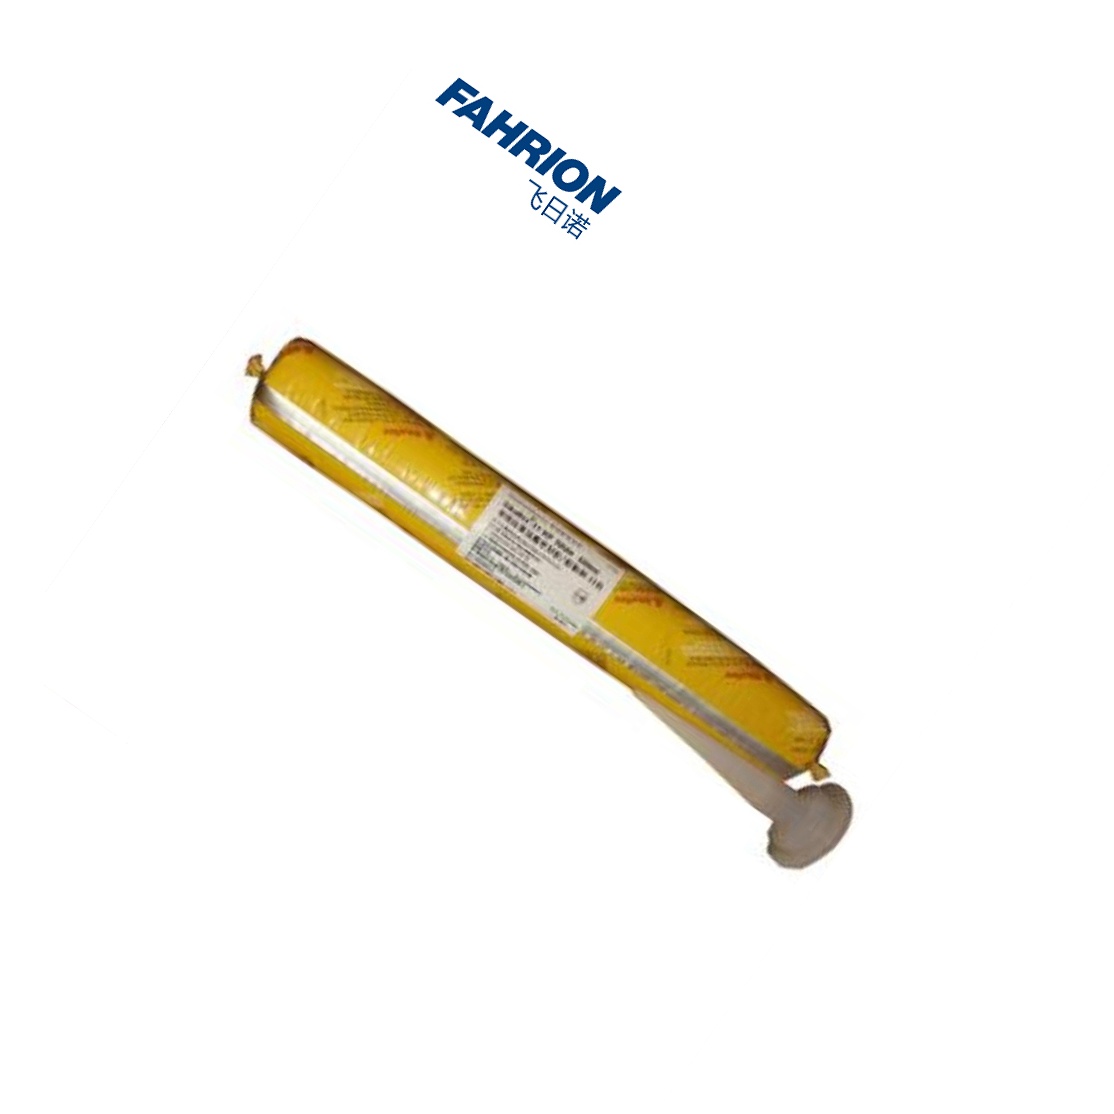 FAHRION 平面密封硅橡胶 GD99-900-3089